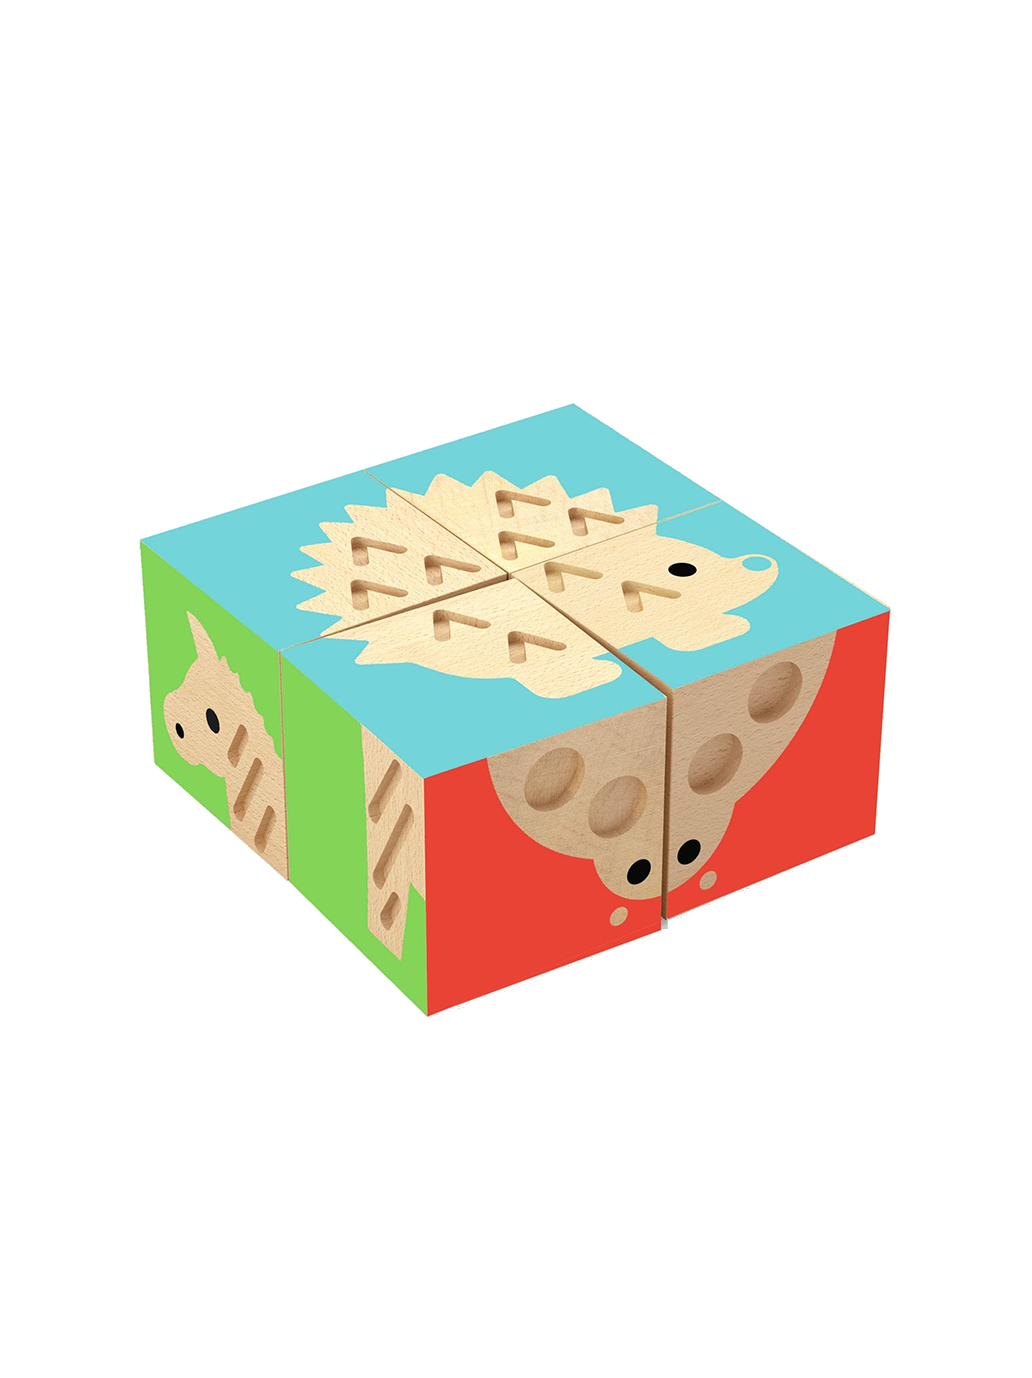 Touch Puzzle sensoriale in legno Basic